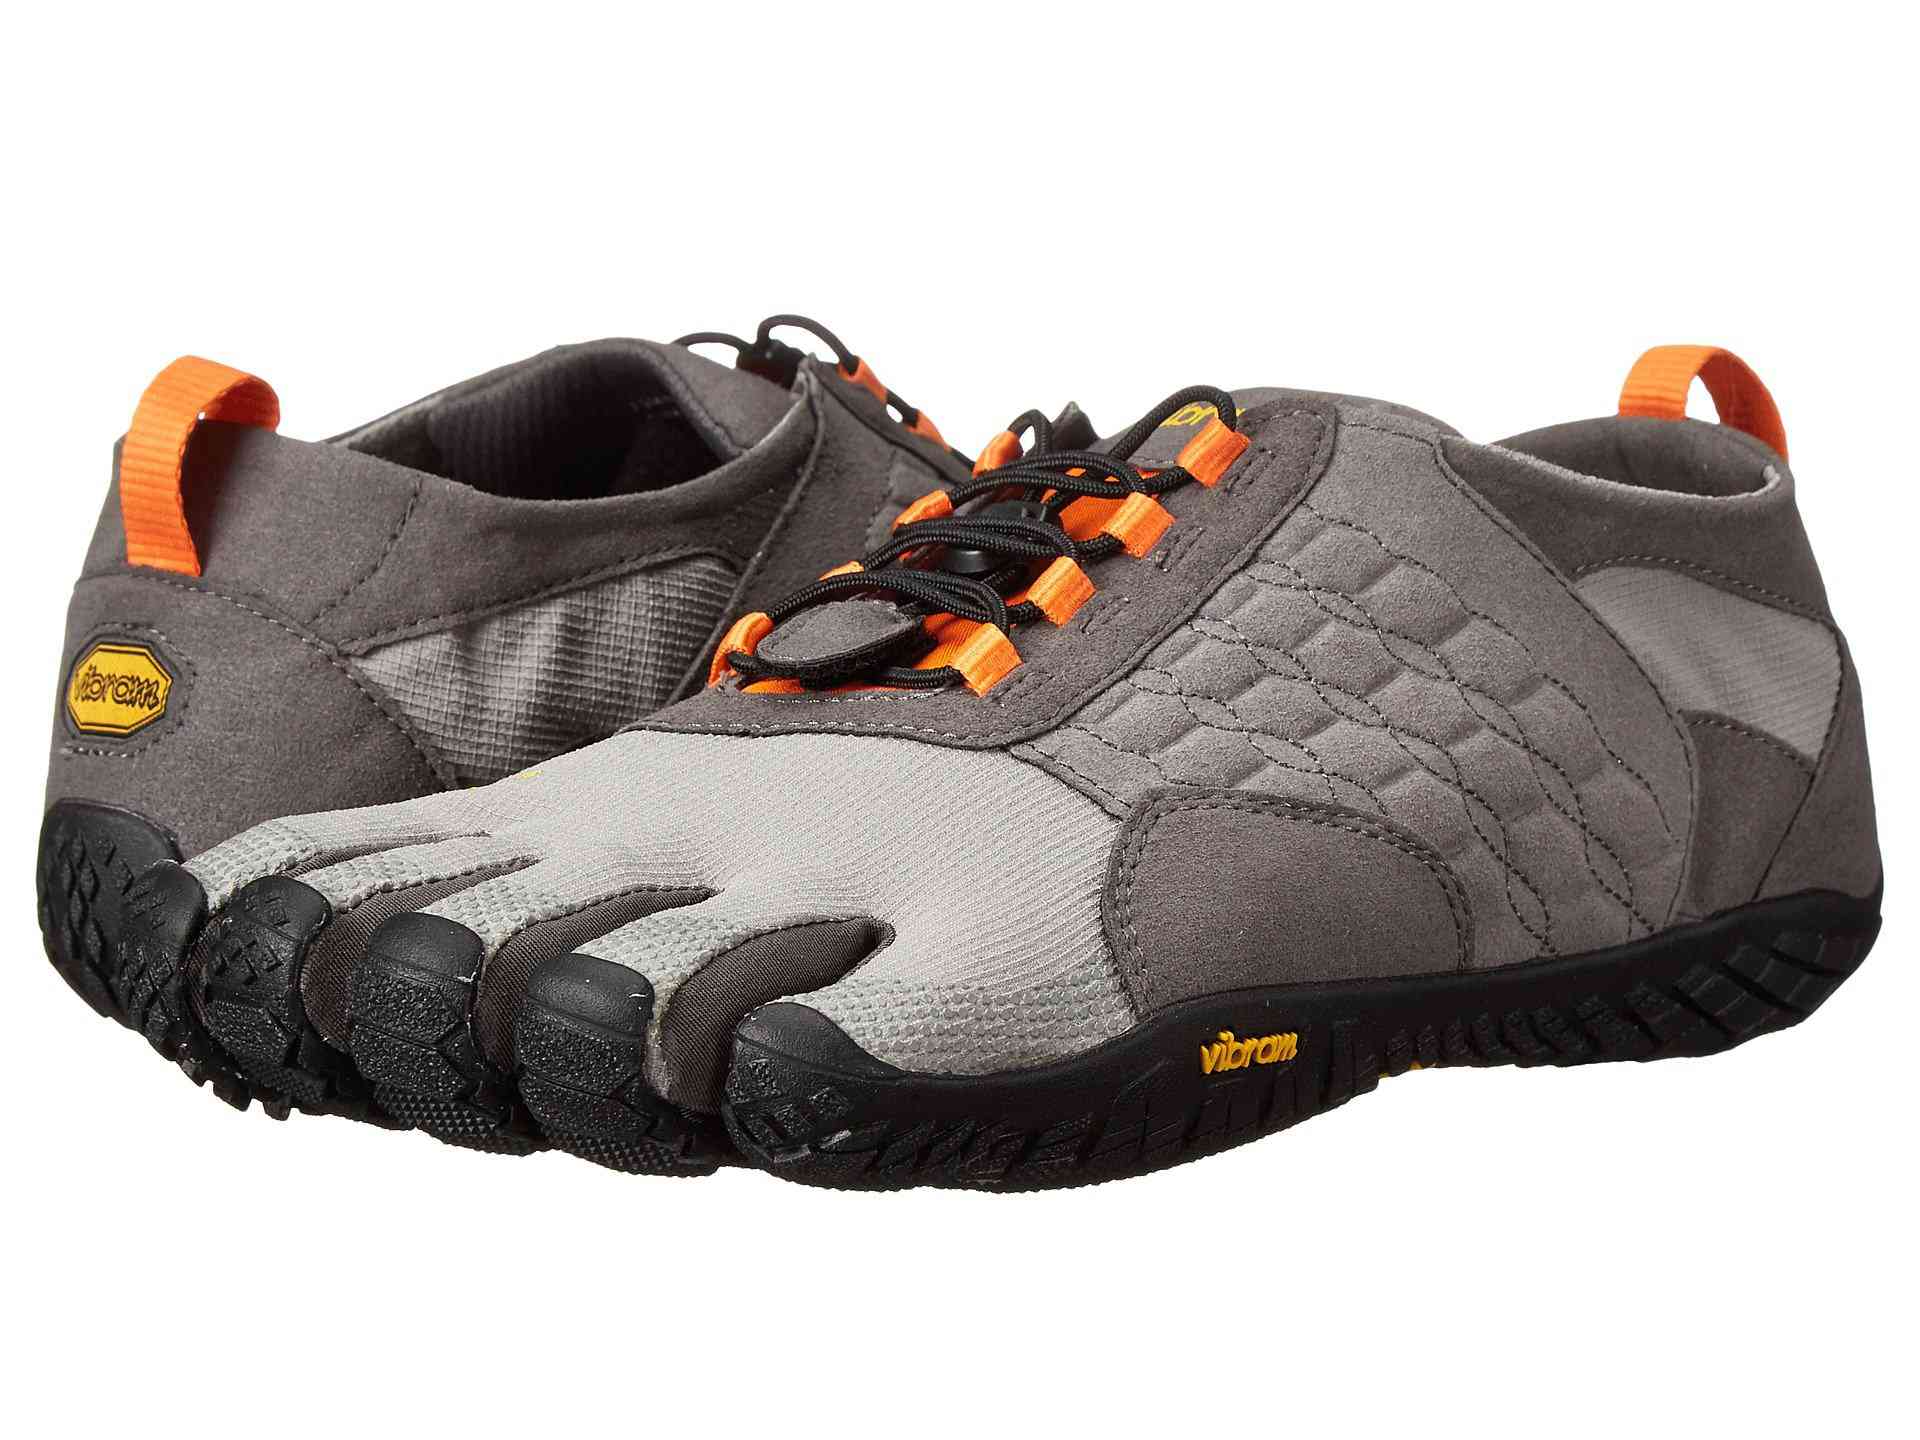 Best Barefoot Running Shoes For Men